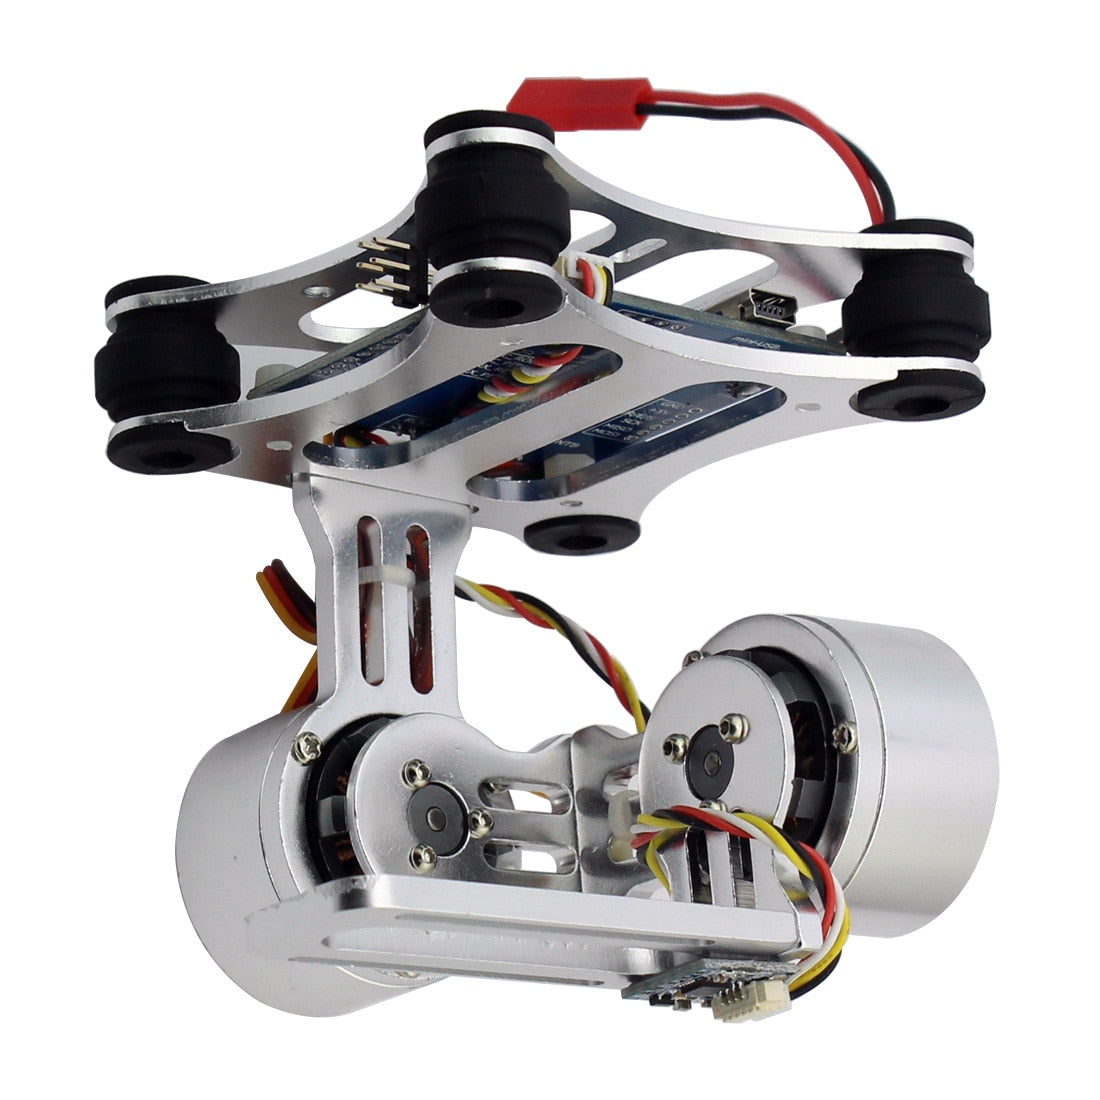 Aluminum 2-Axis Brushless Gimbal Camera Mount Controller Plug for Gopro 3 3+ Cameras DJI Phantom Trex 500 / 550 Drone No Manual